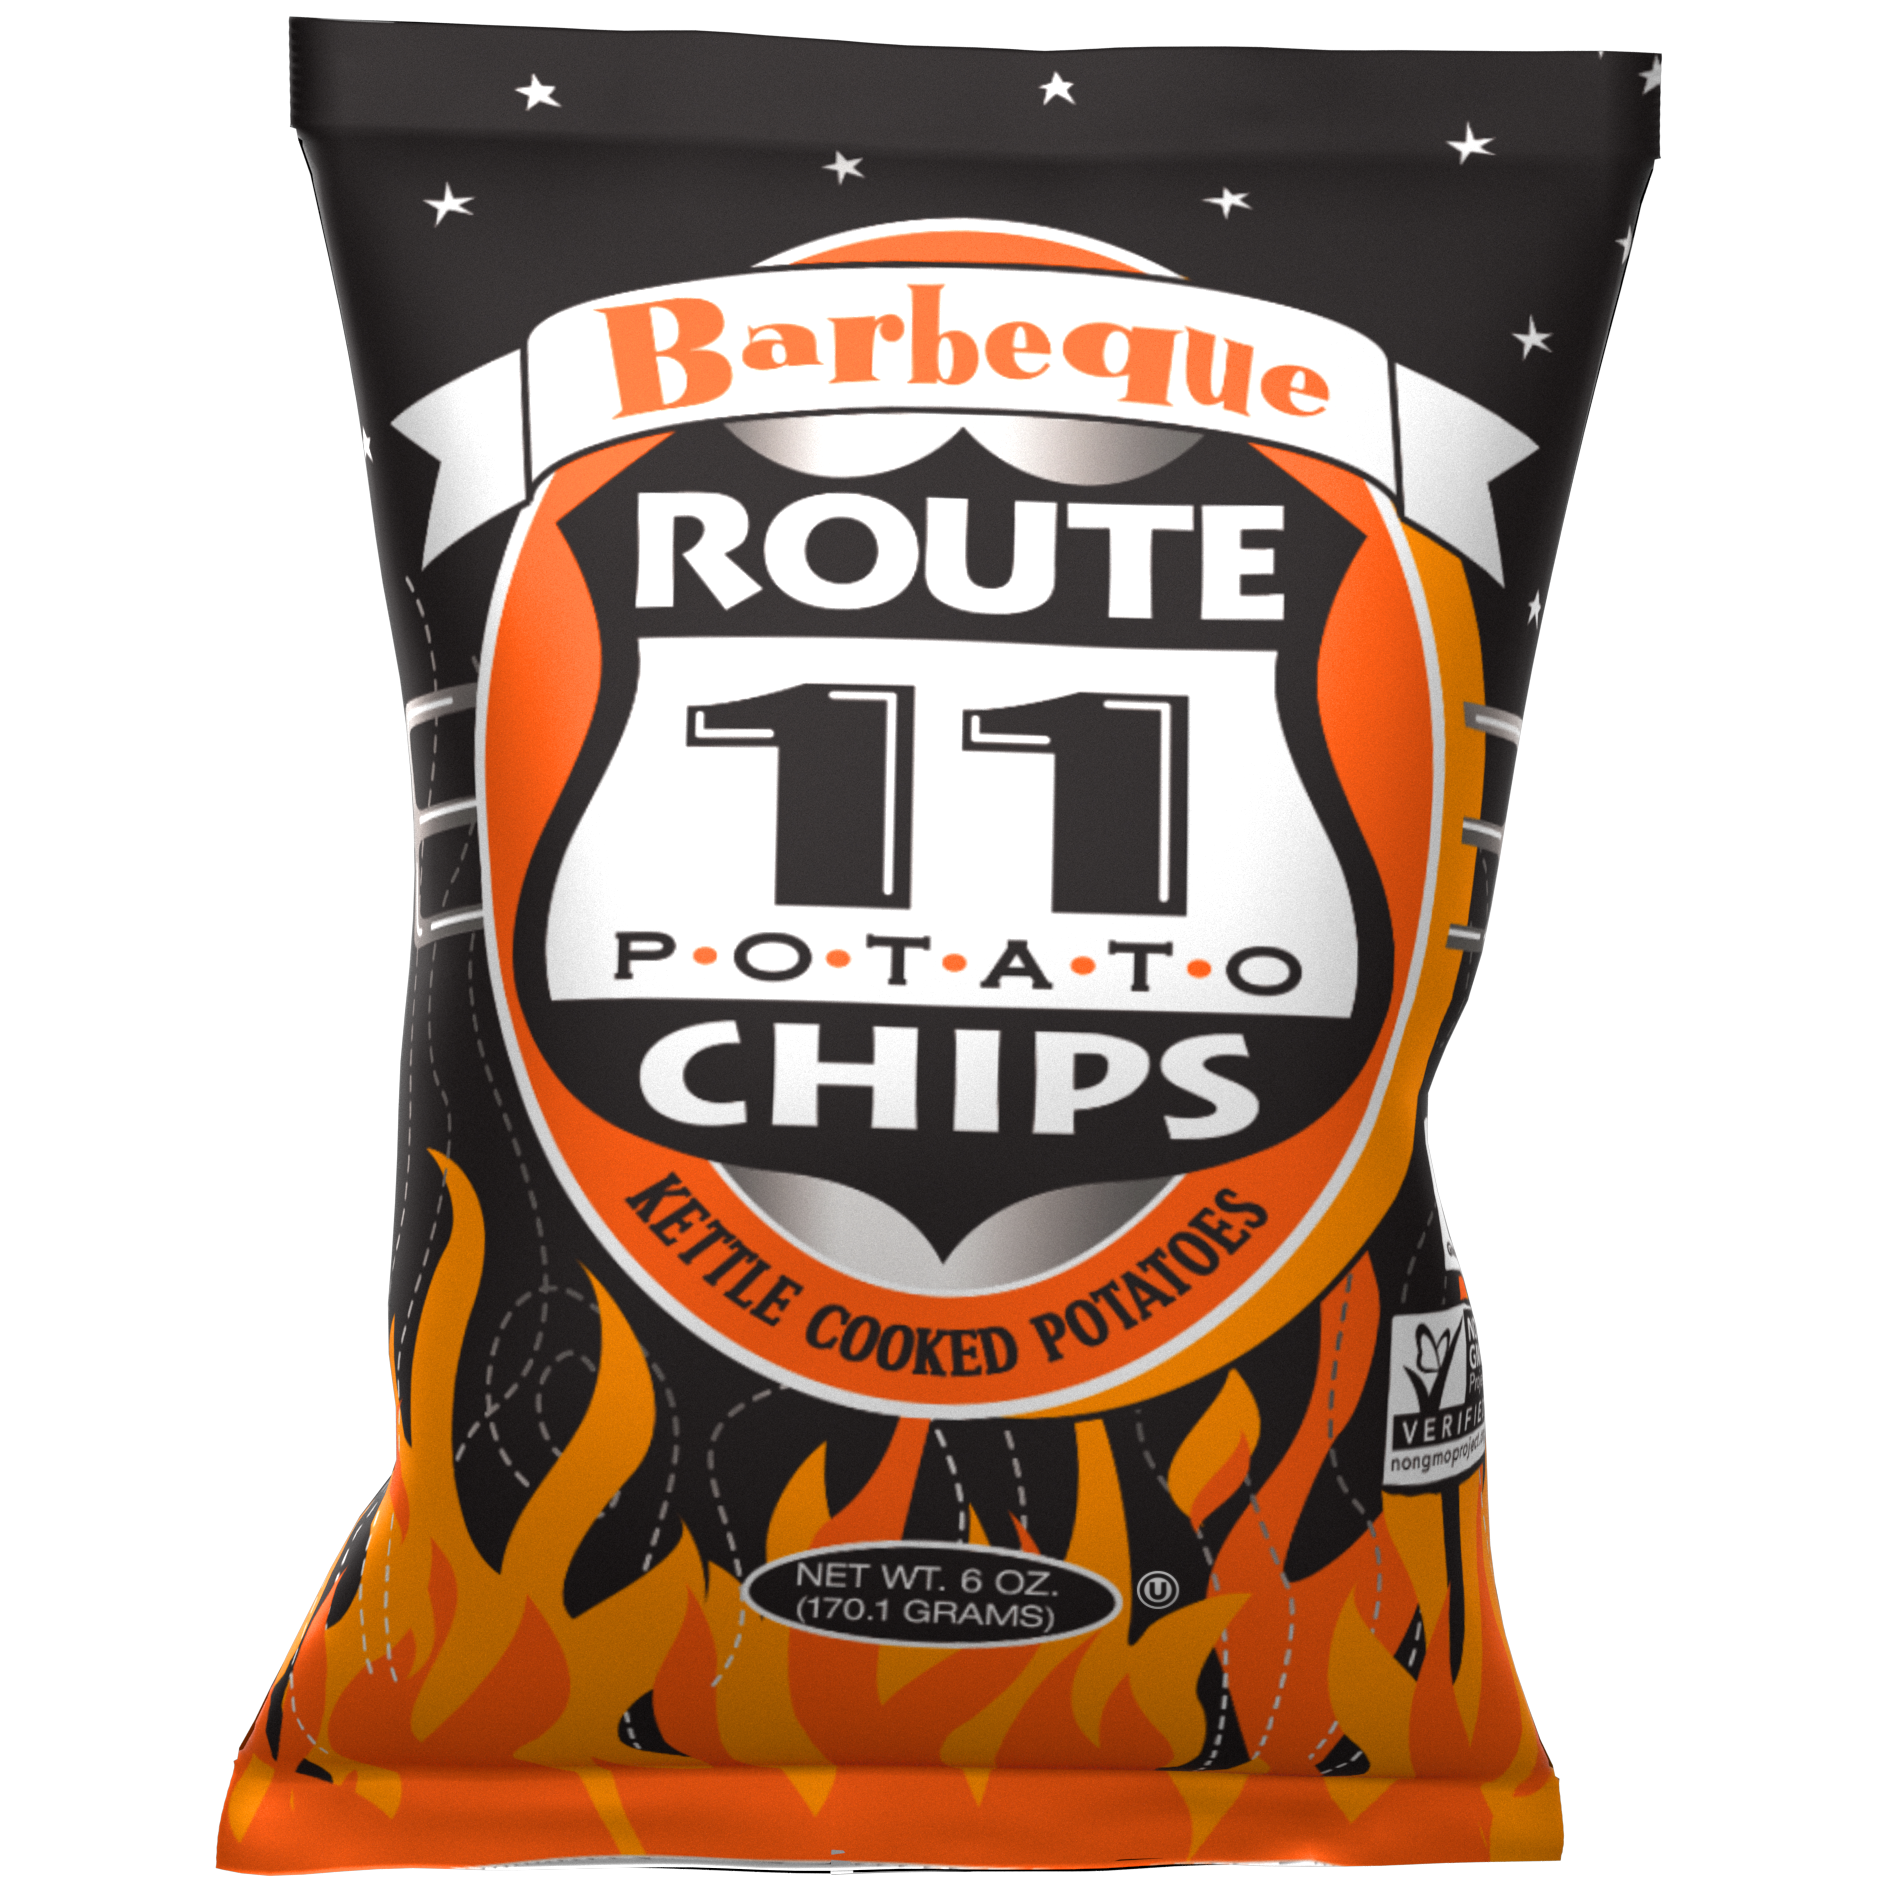 Joie Healthy Potato Chips